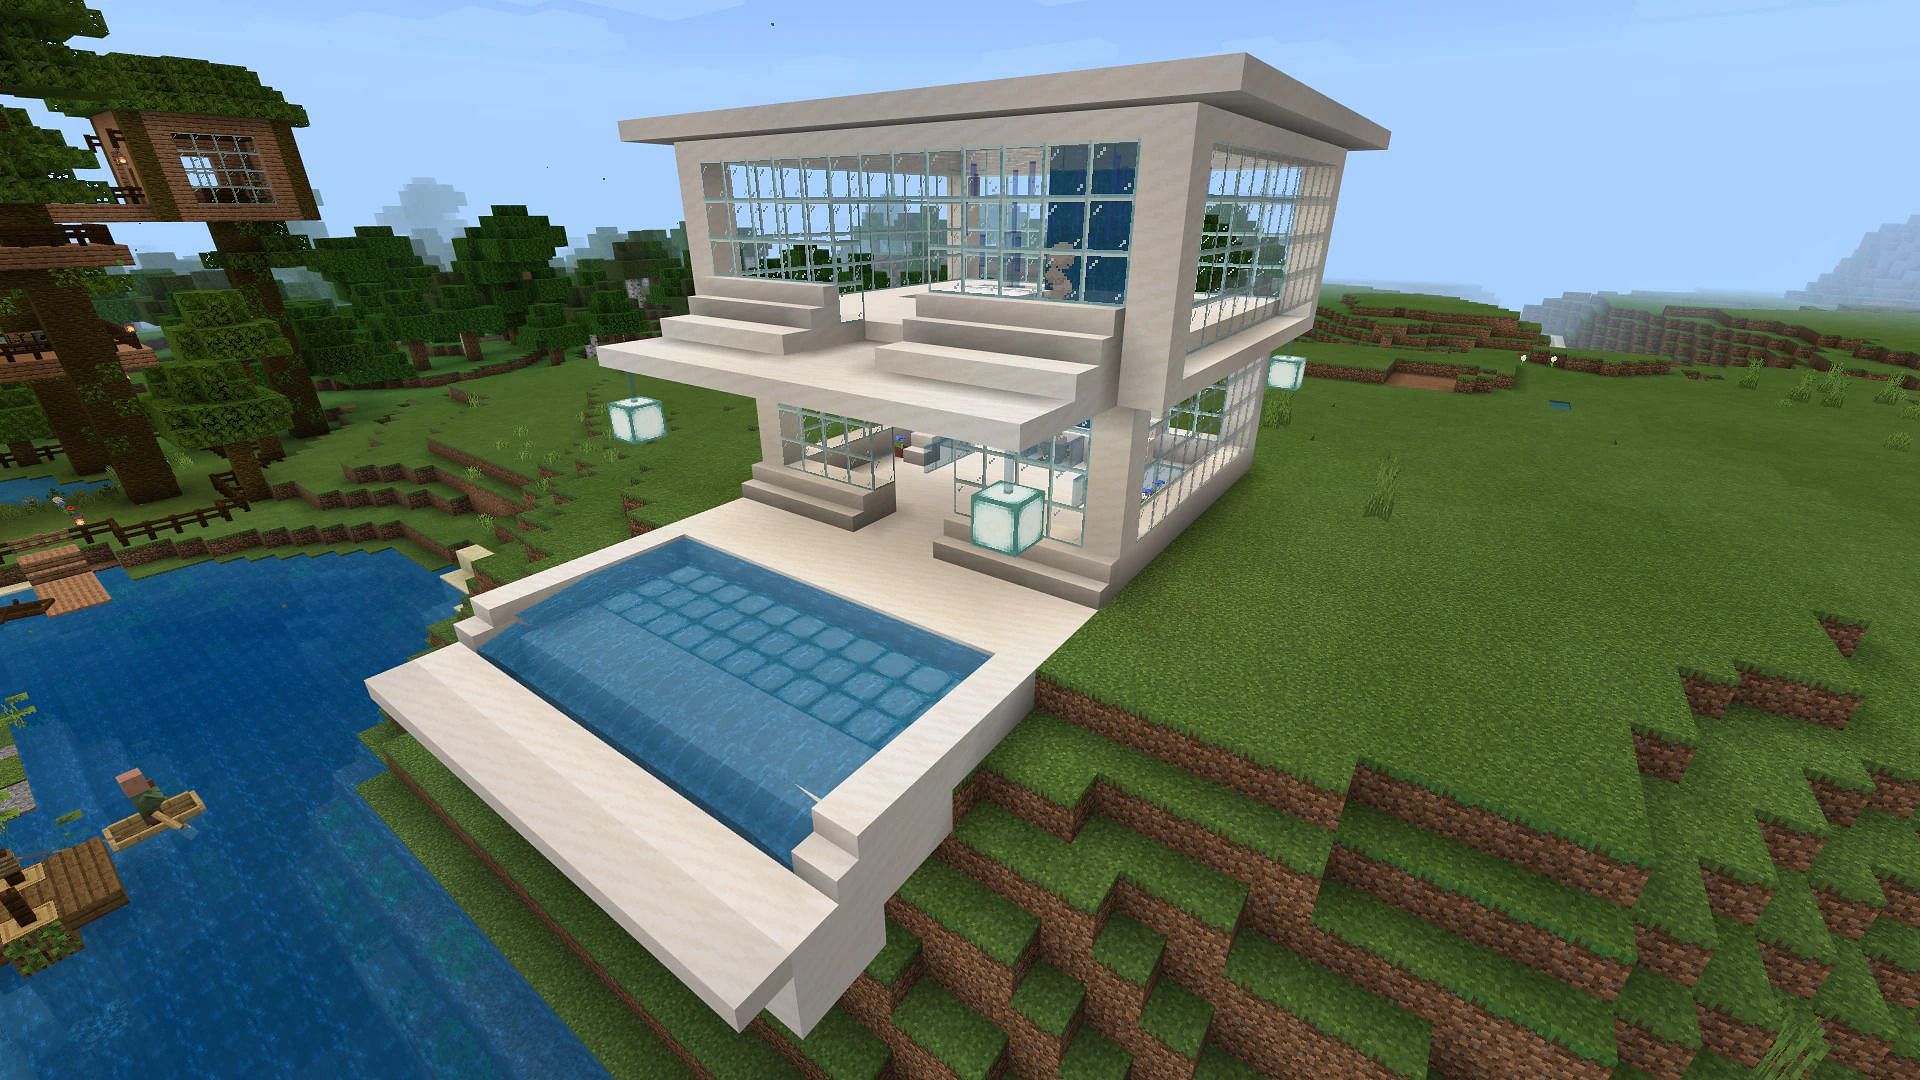 A house in Minecraft (Image via Minecraft)